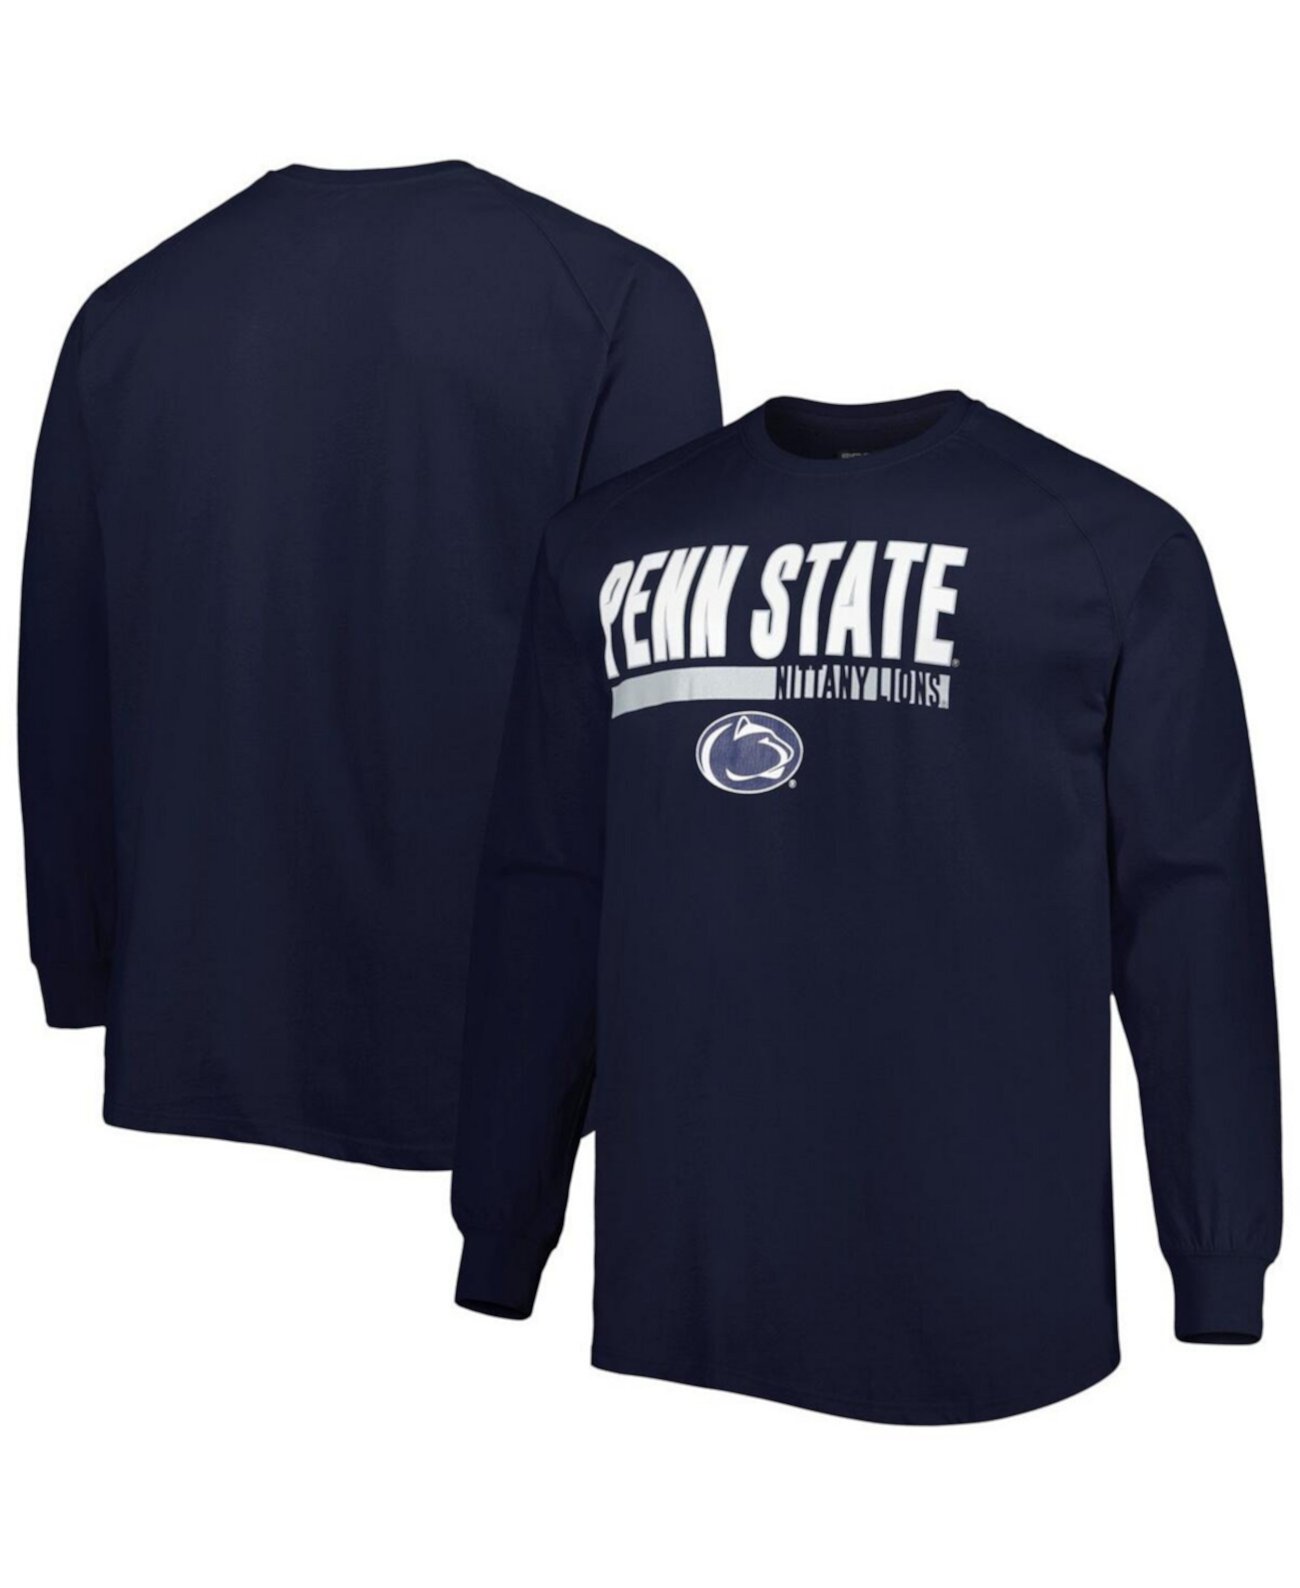 Мужская темно-синяя футболка Penn State Nittany Lions Big and Tall Two-Hit реглан с длинным рукавом Profile